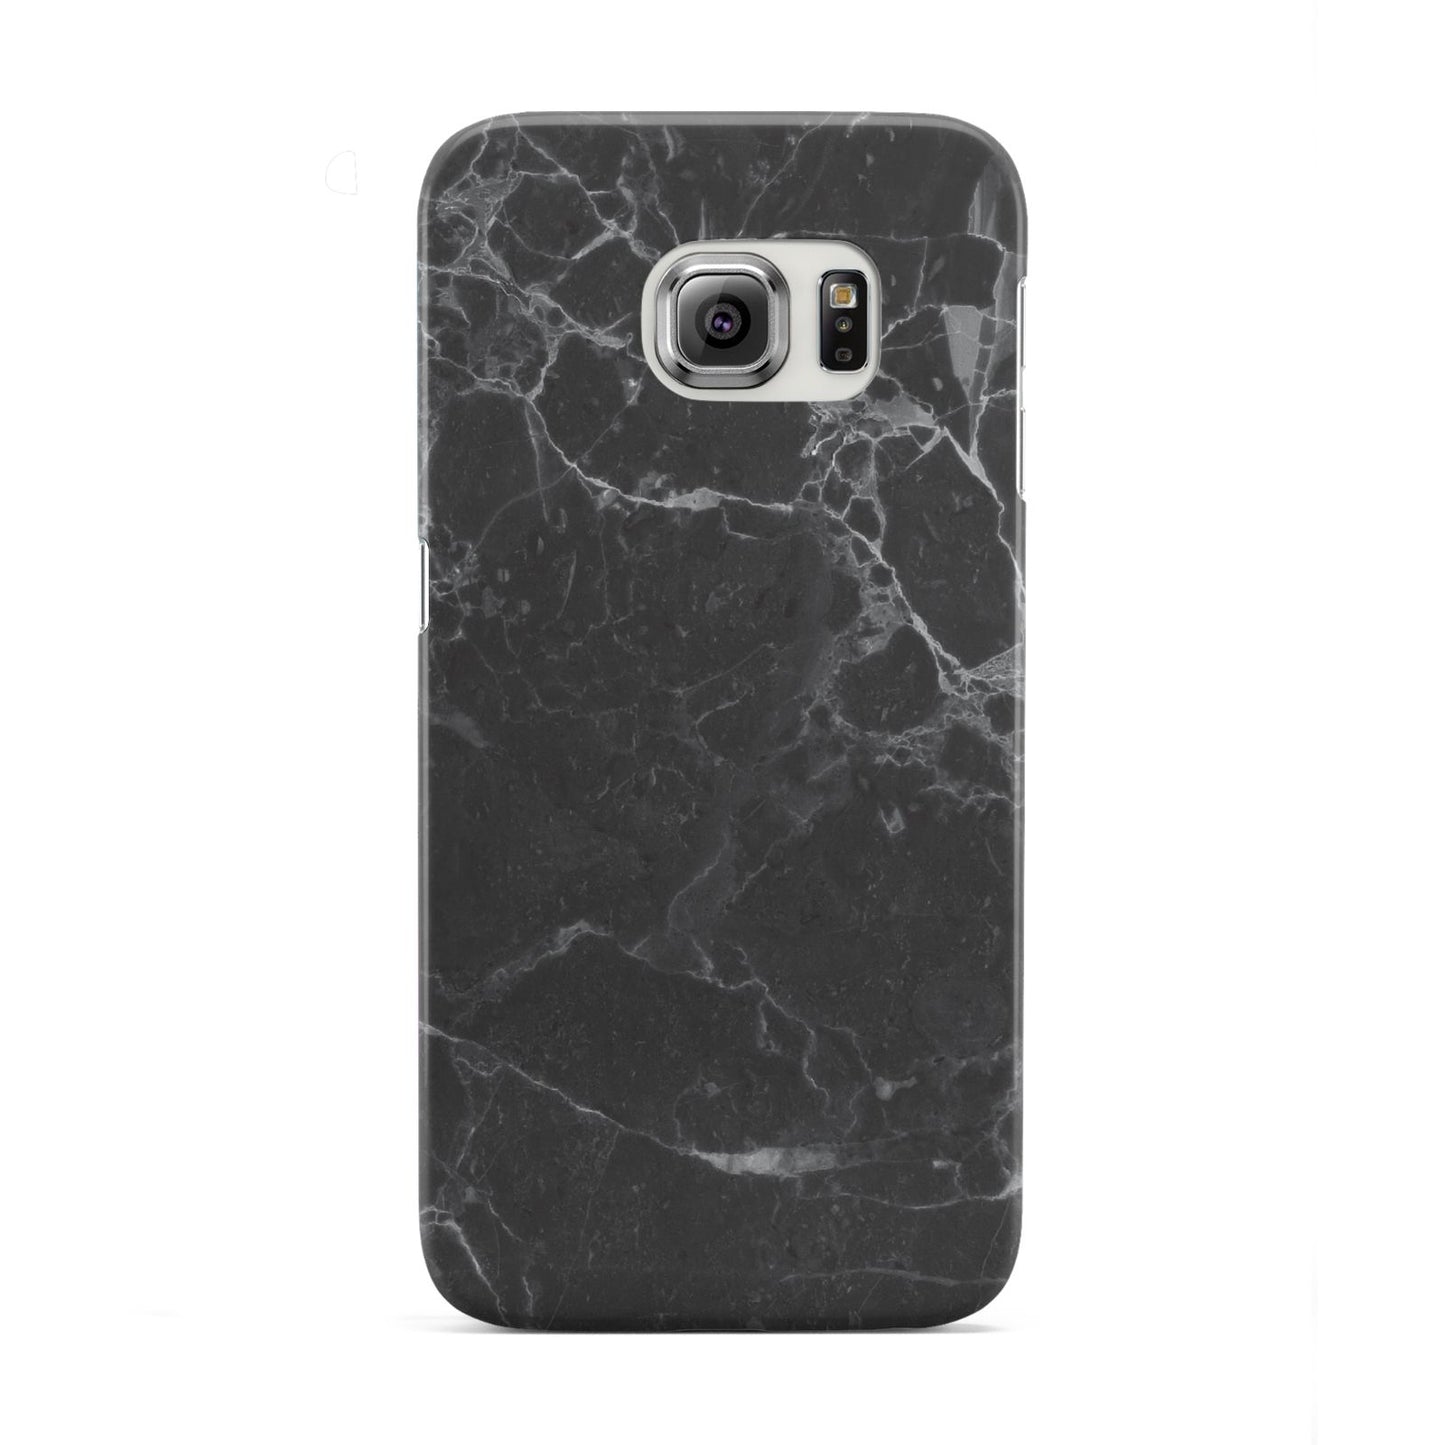 Faux Marble Effect Black Samsung Galaxy S6 Edge Case